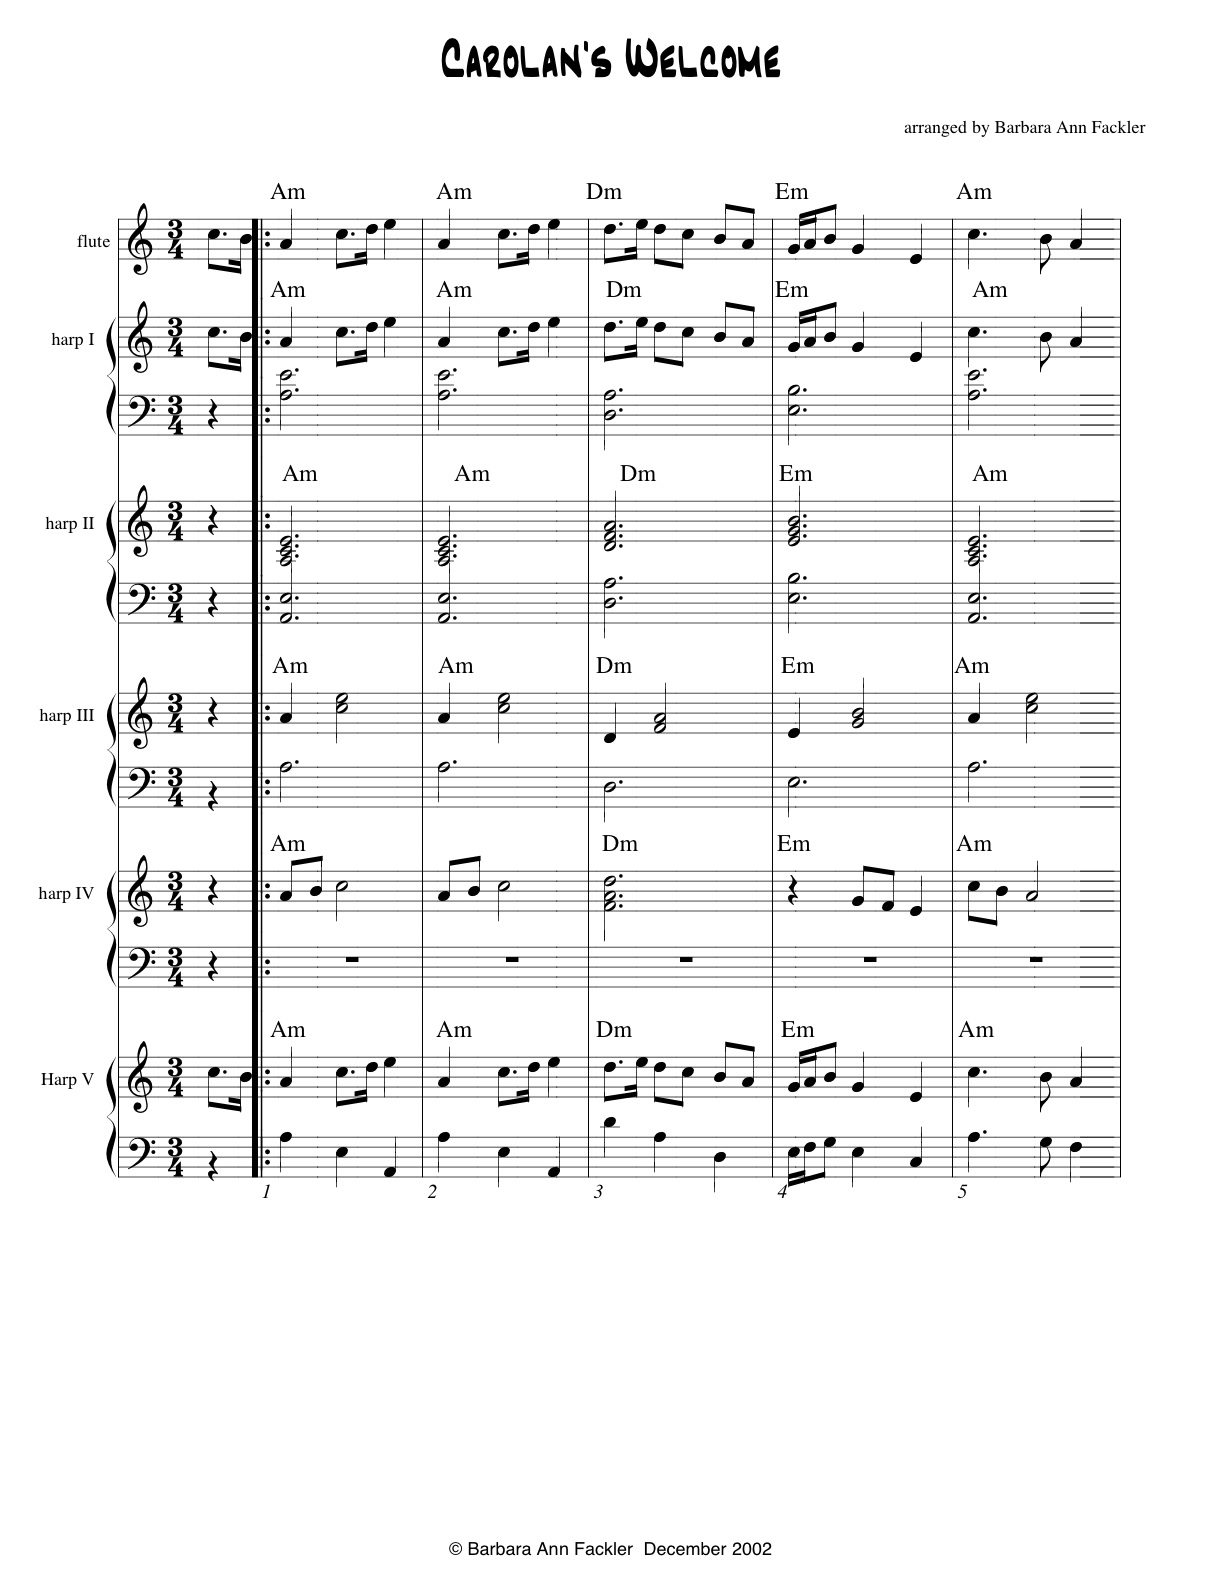 harp ensemble: Carolan's Welcome multi level harp arrangement sheet music full score and parts